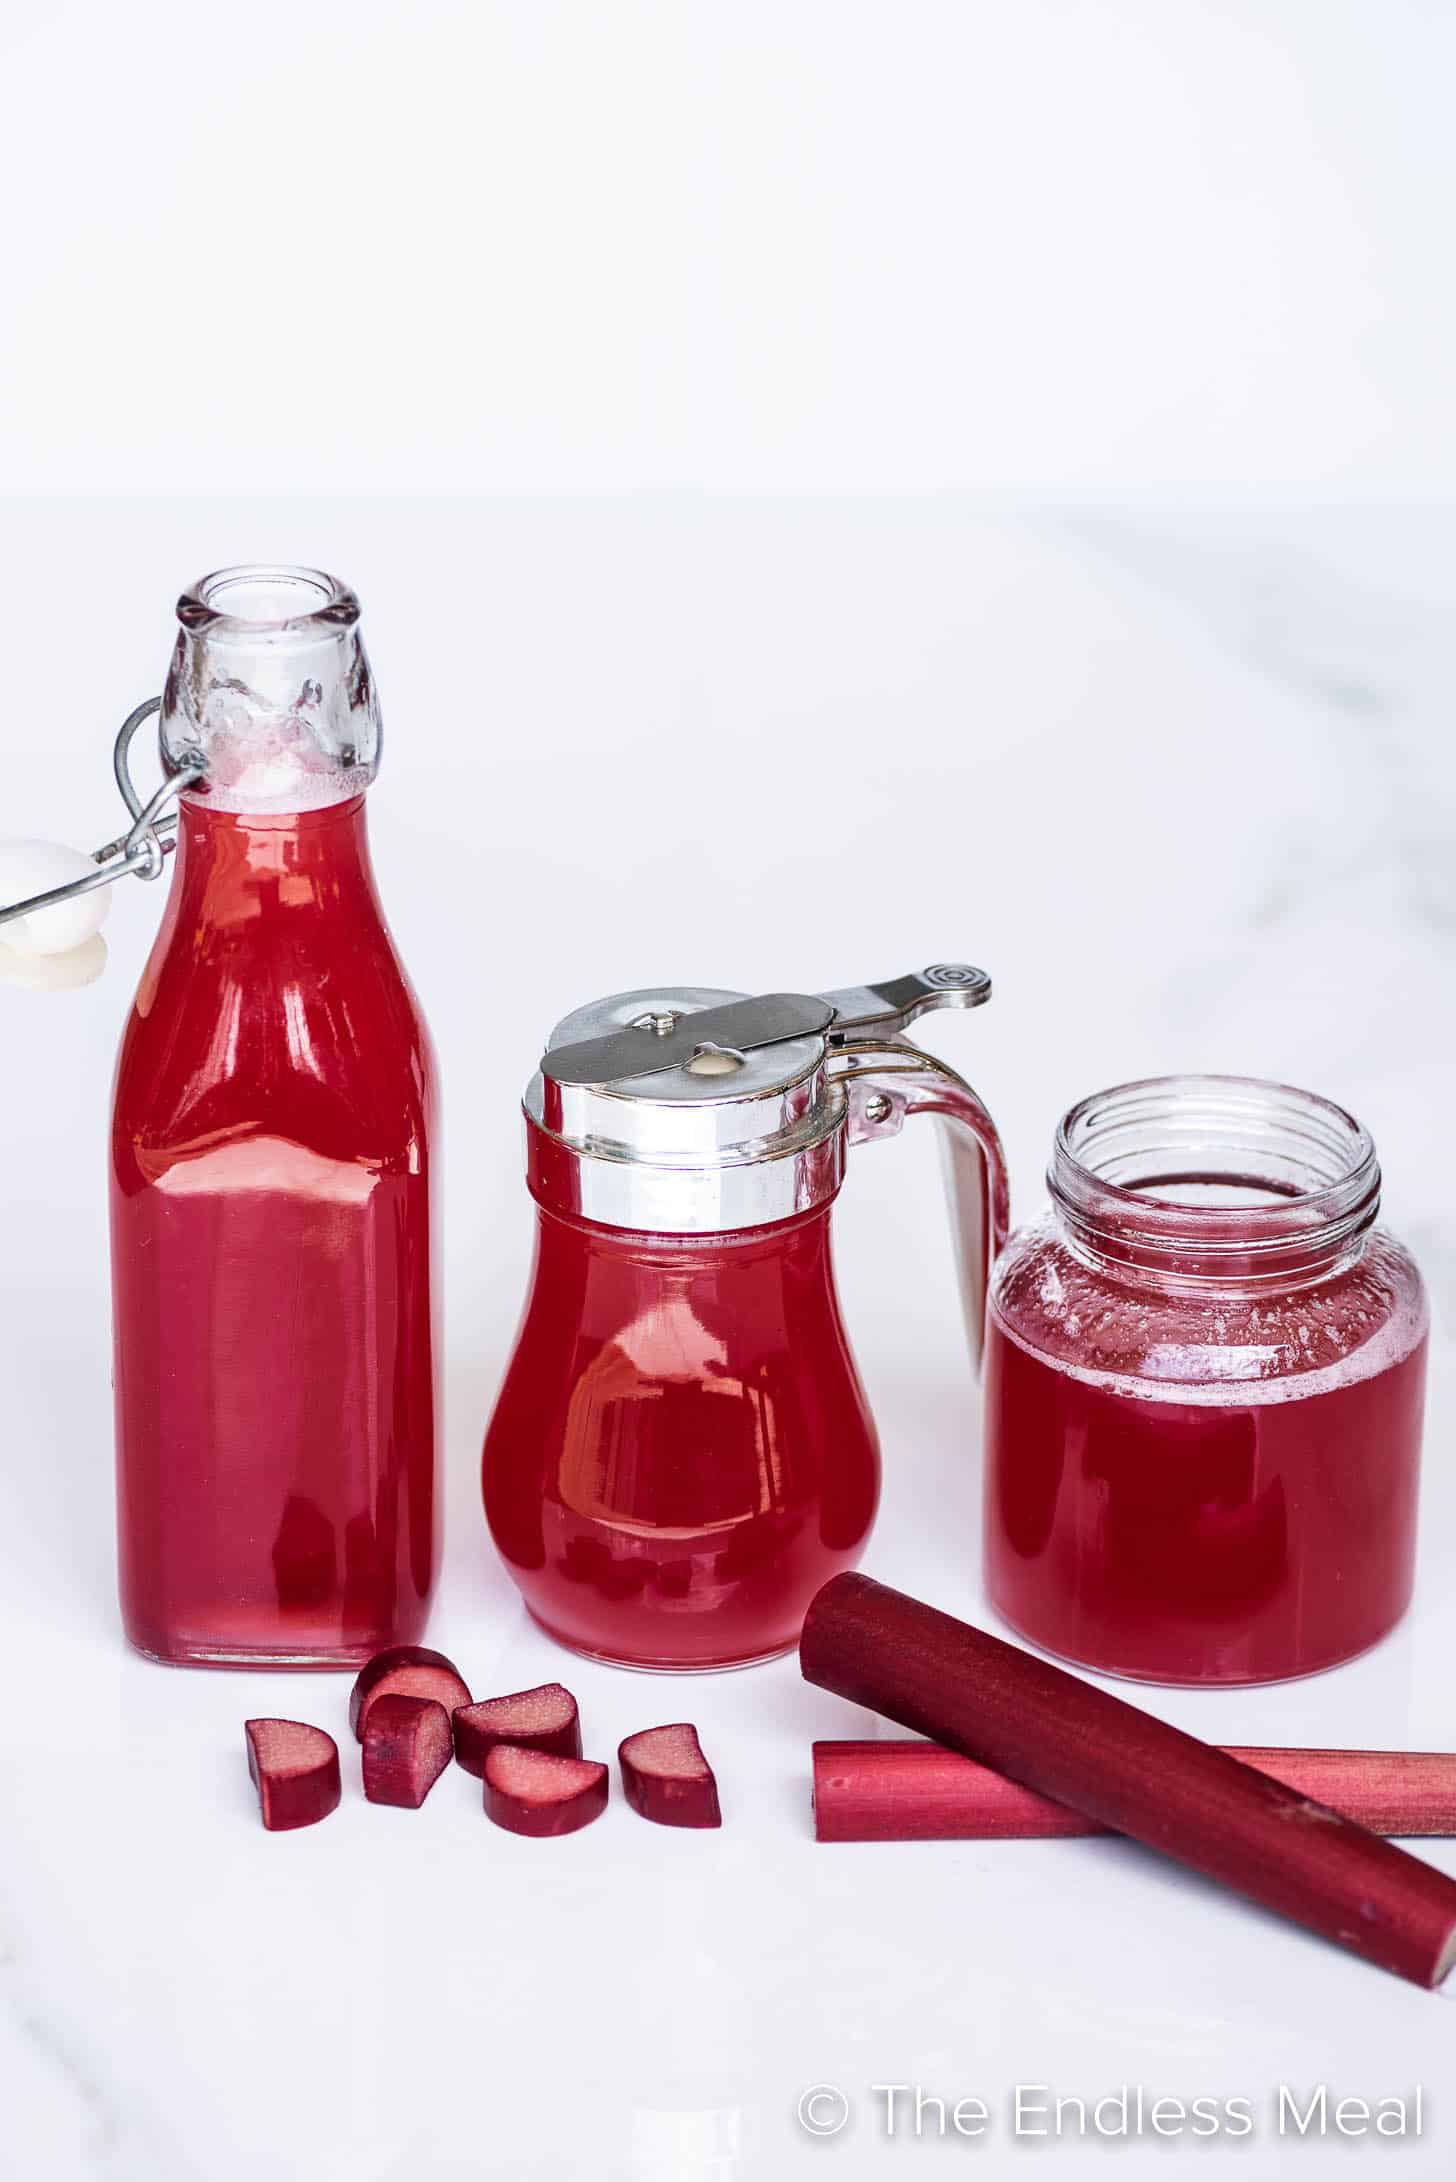 3 jars of Rhubarb Syrup